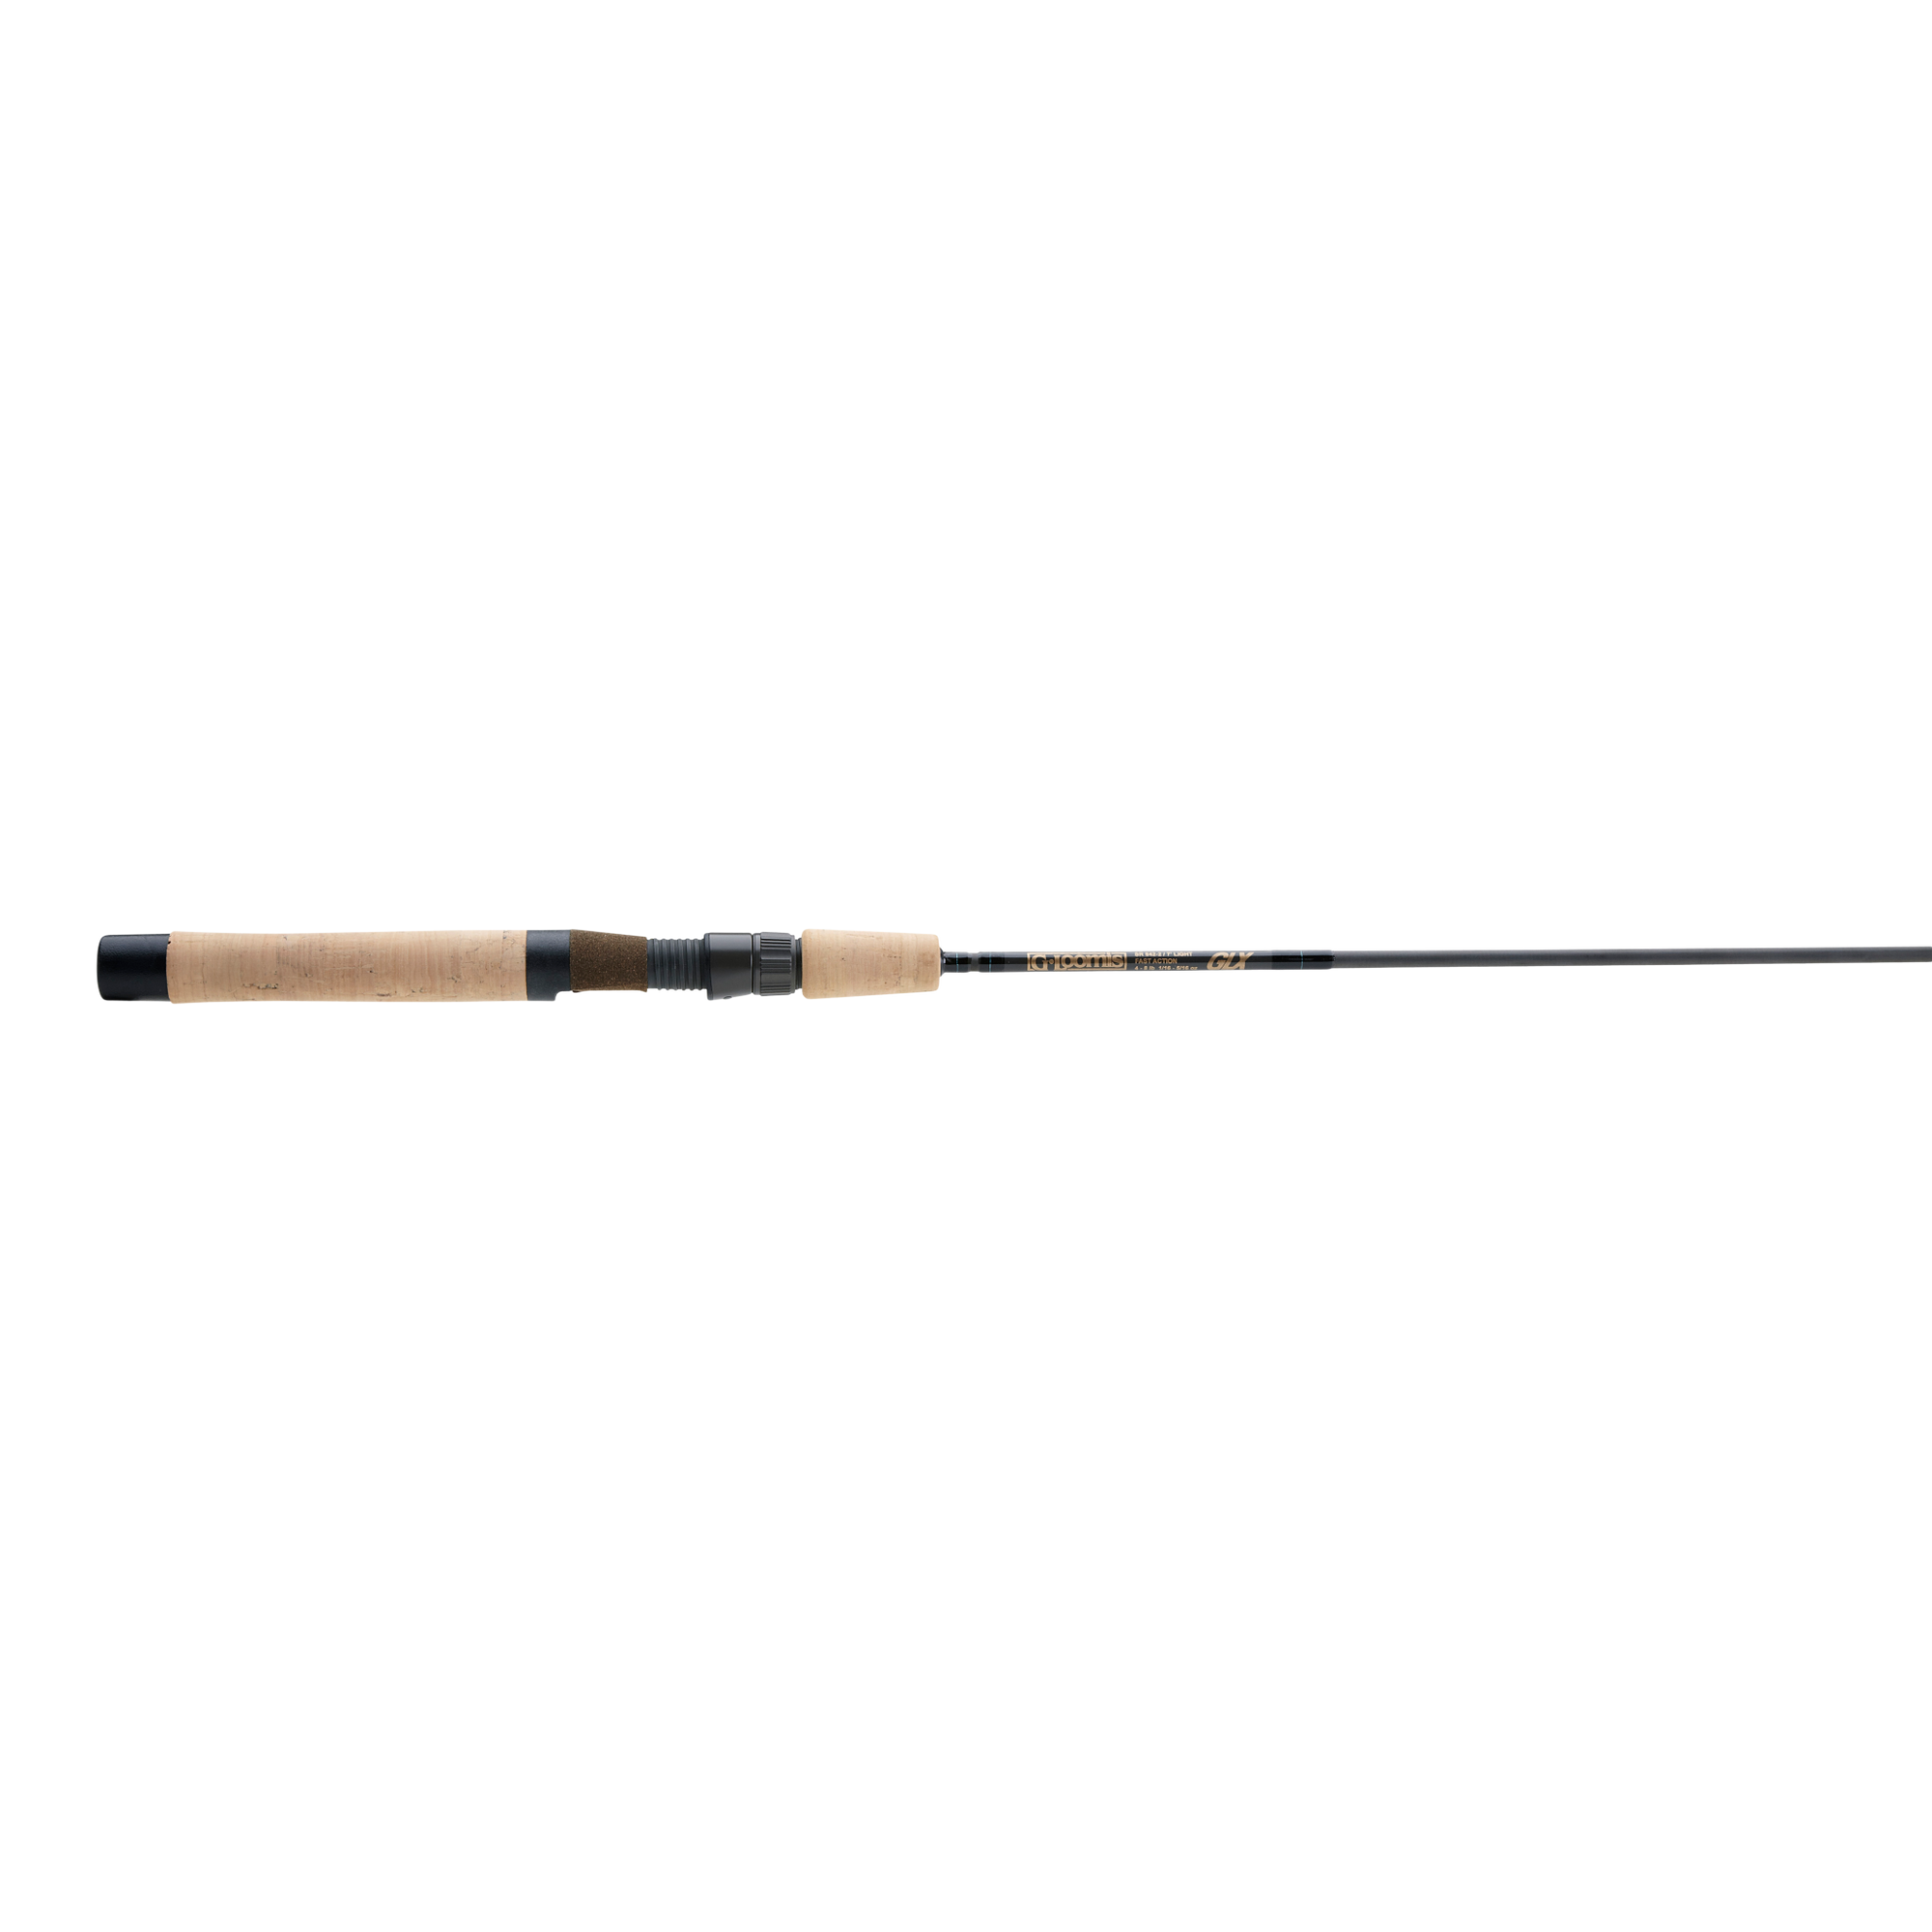 Best Portable Fishing Rod Maple Portable Fishing Pole Kit, 53% OFF